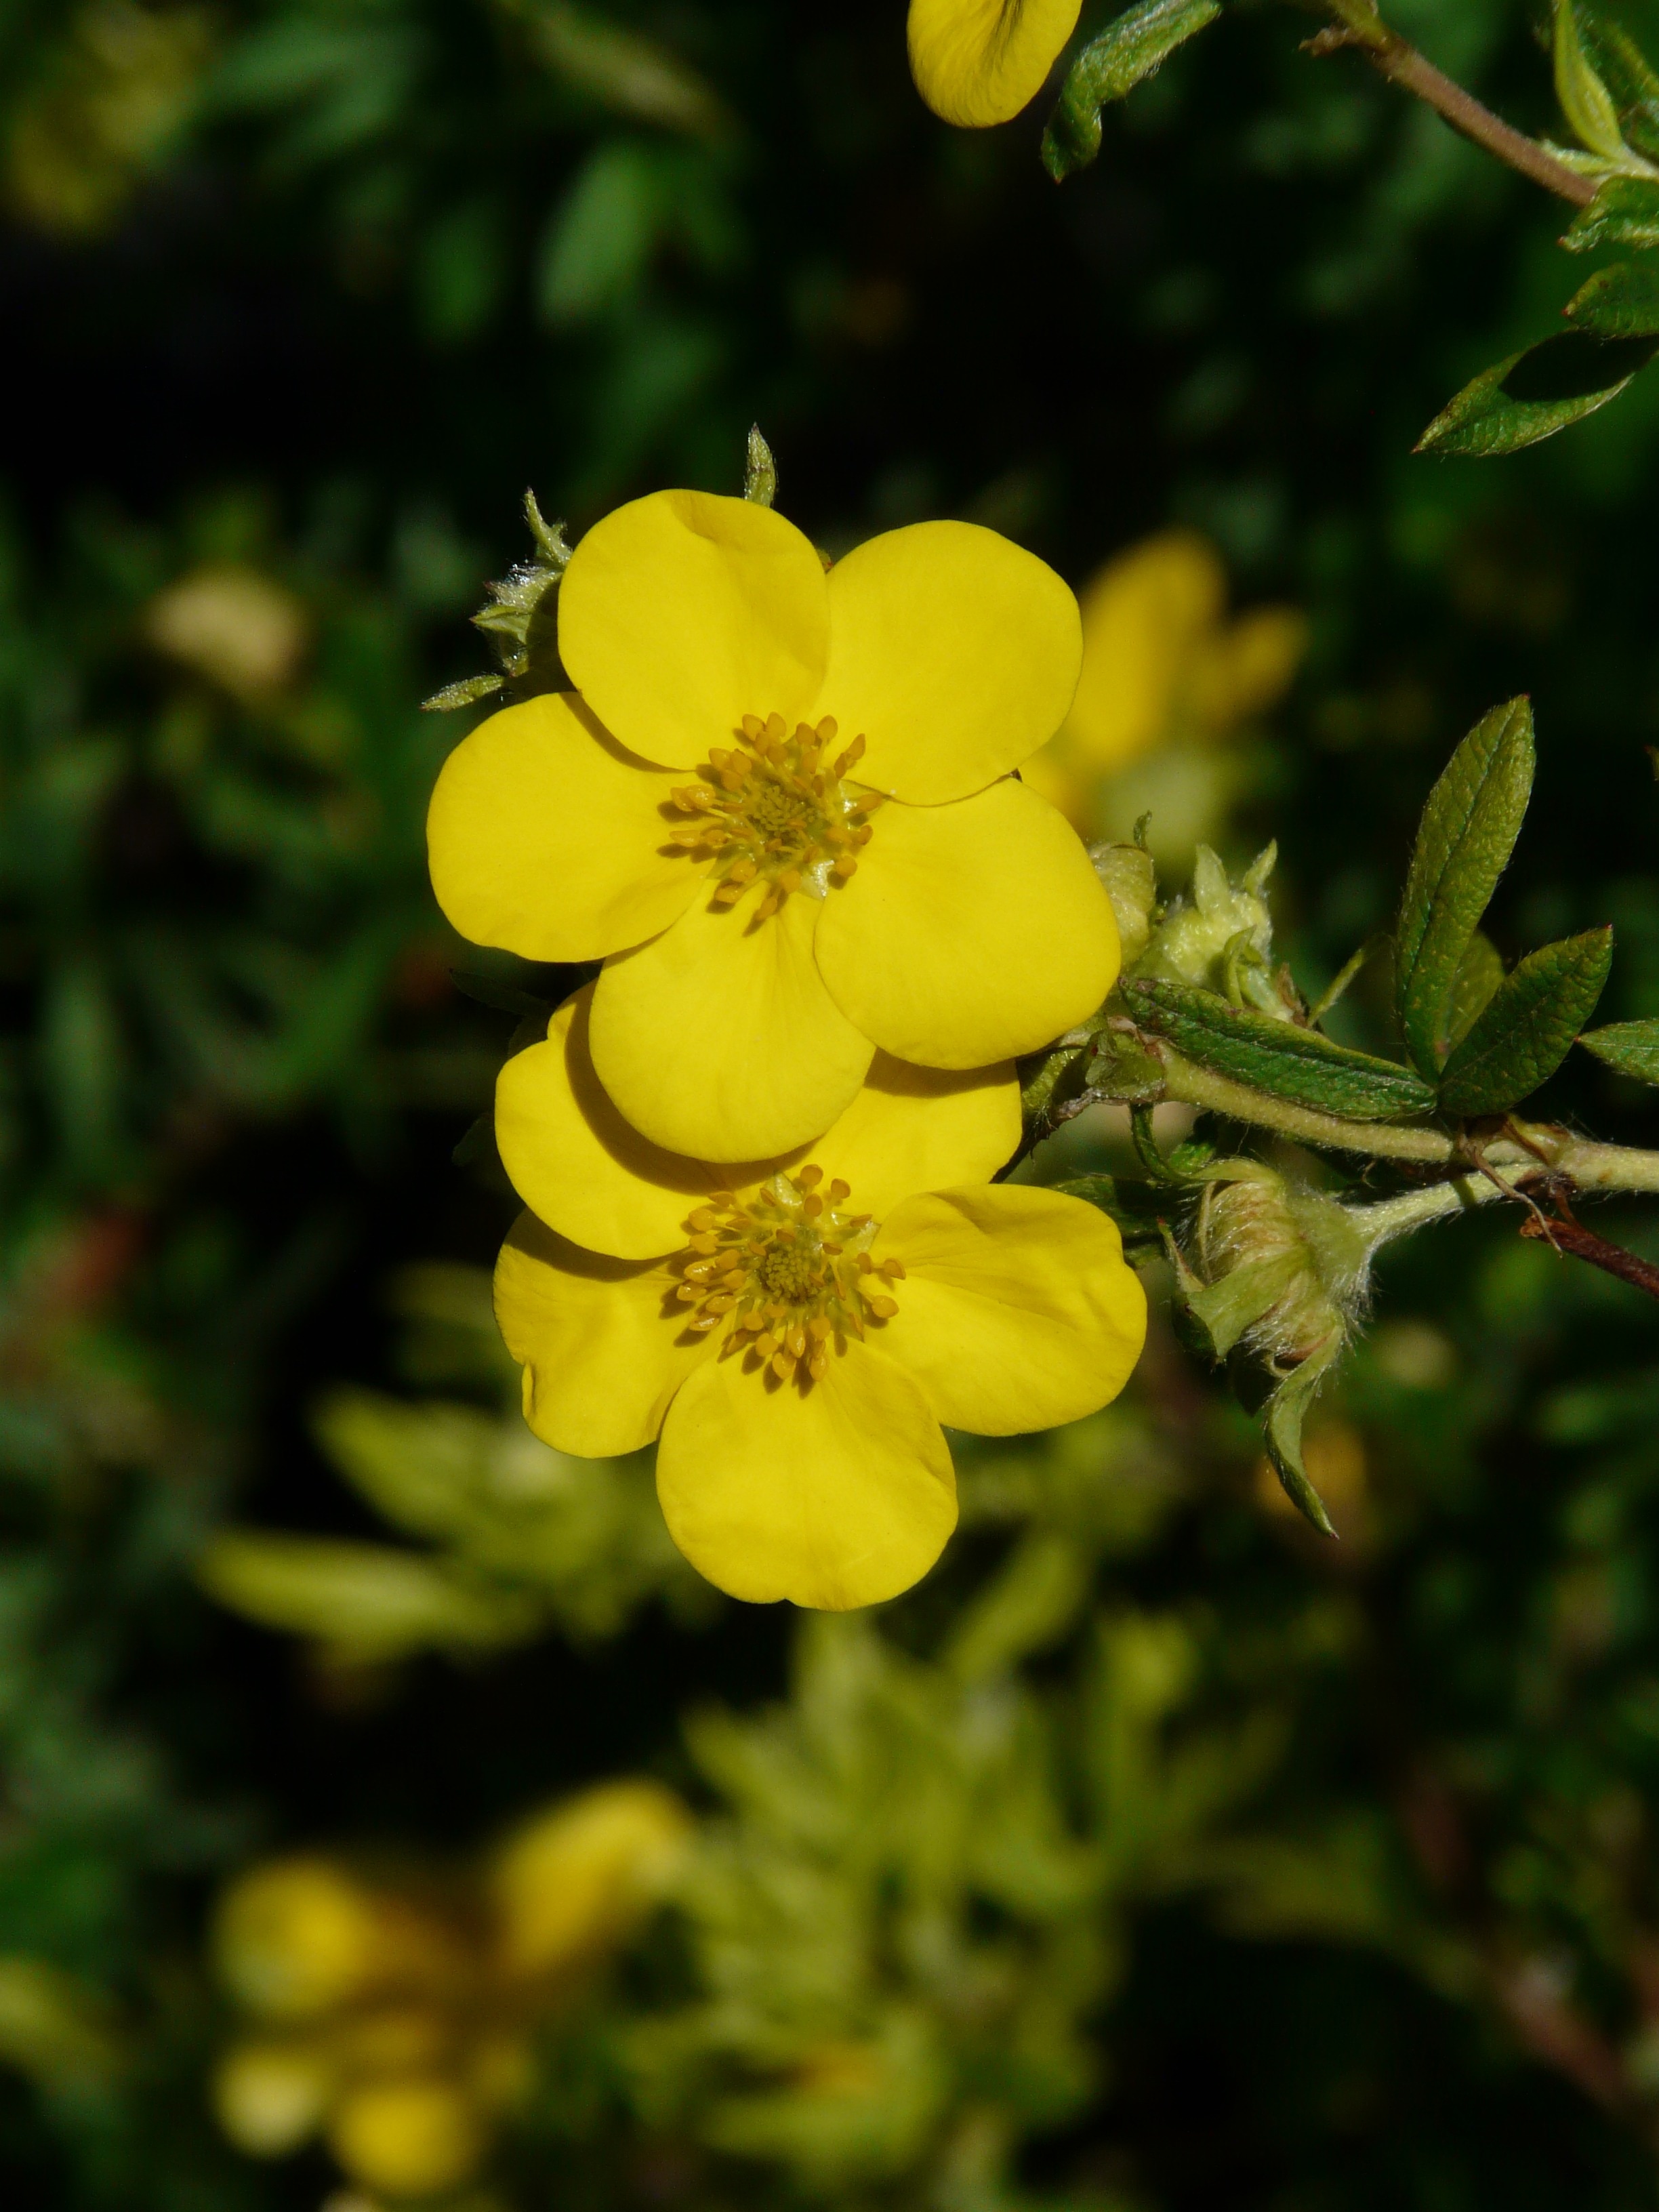 yellow 5 petaled flowers